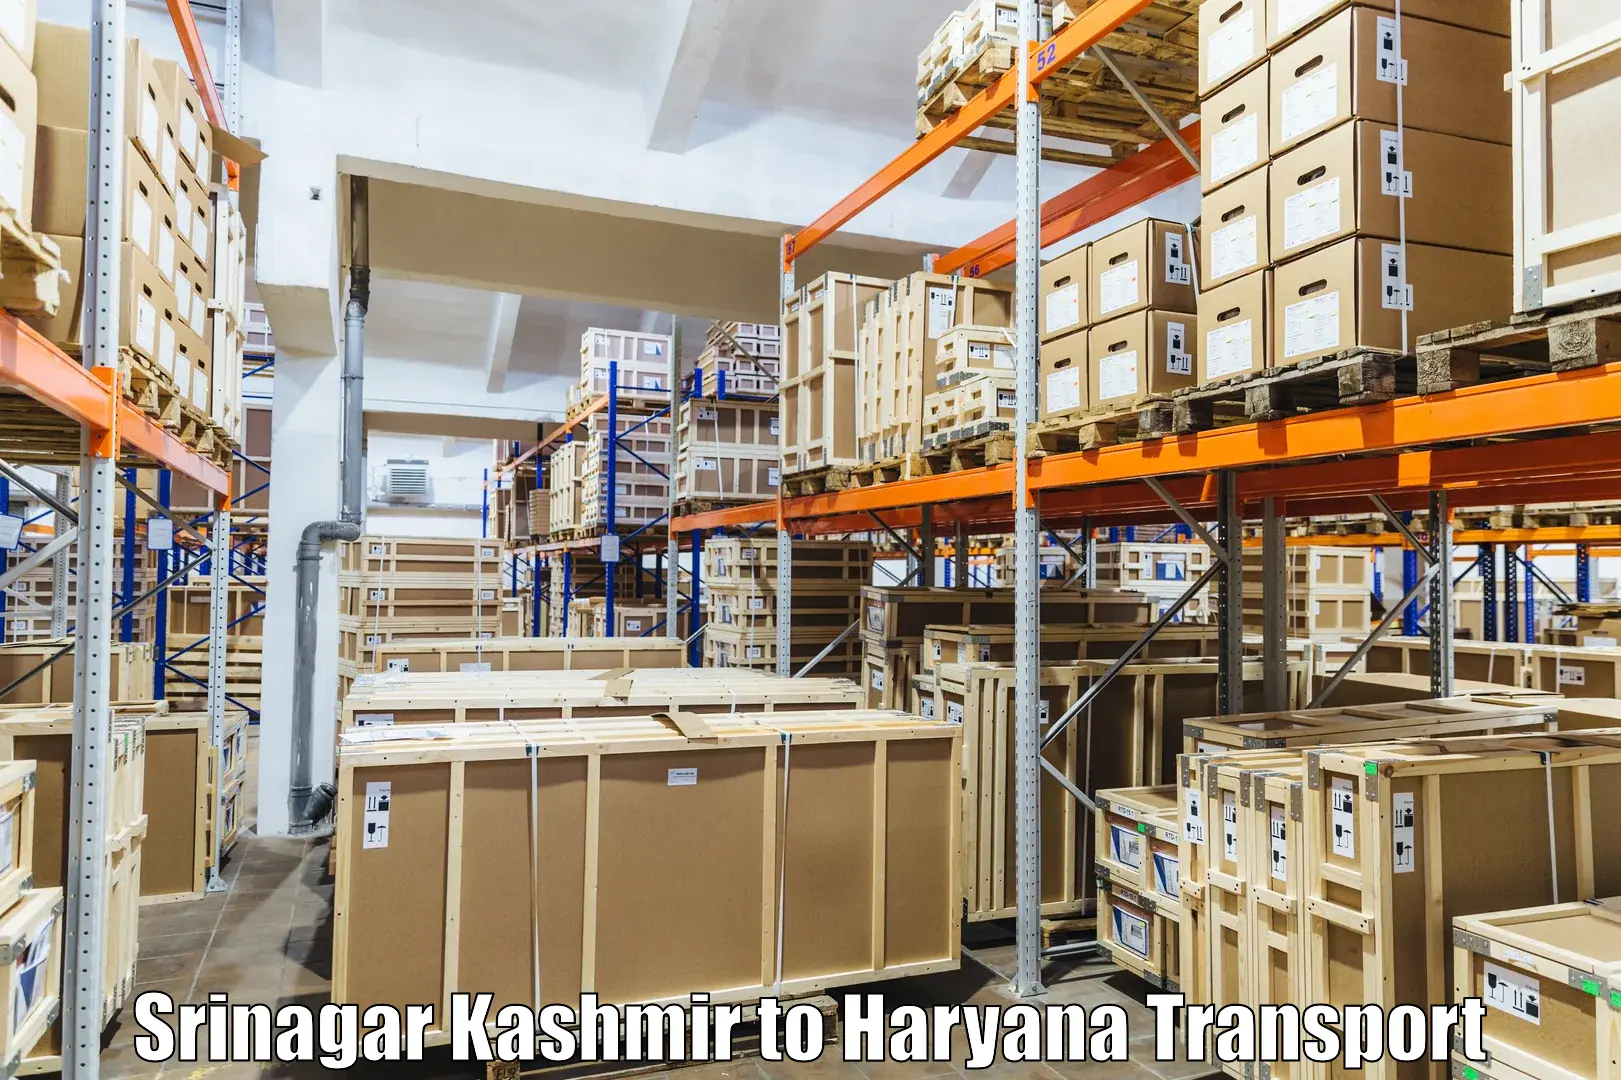 Nearby transport service Srinagar Kashmir to Gurgaon